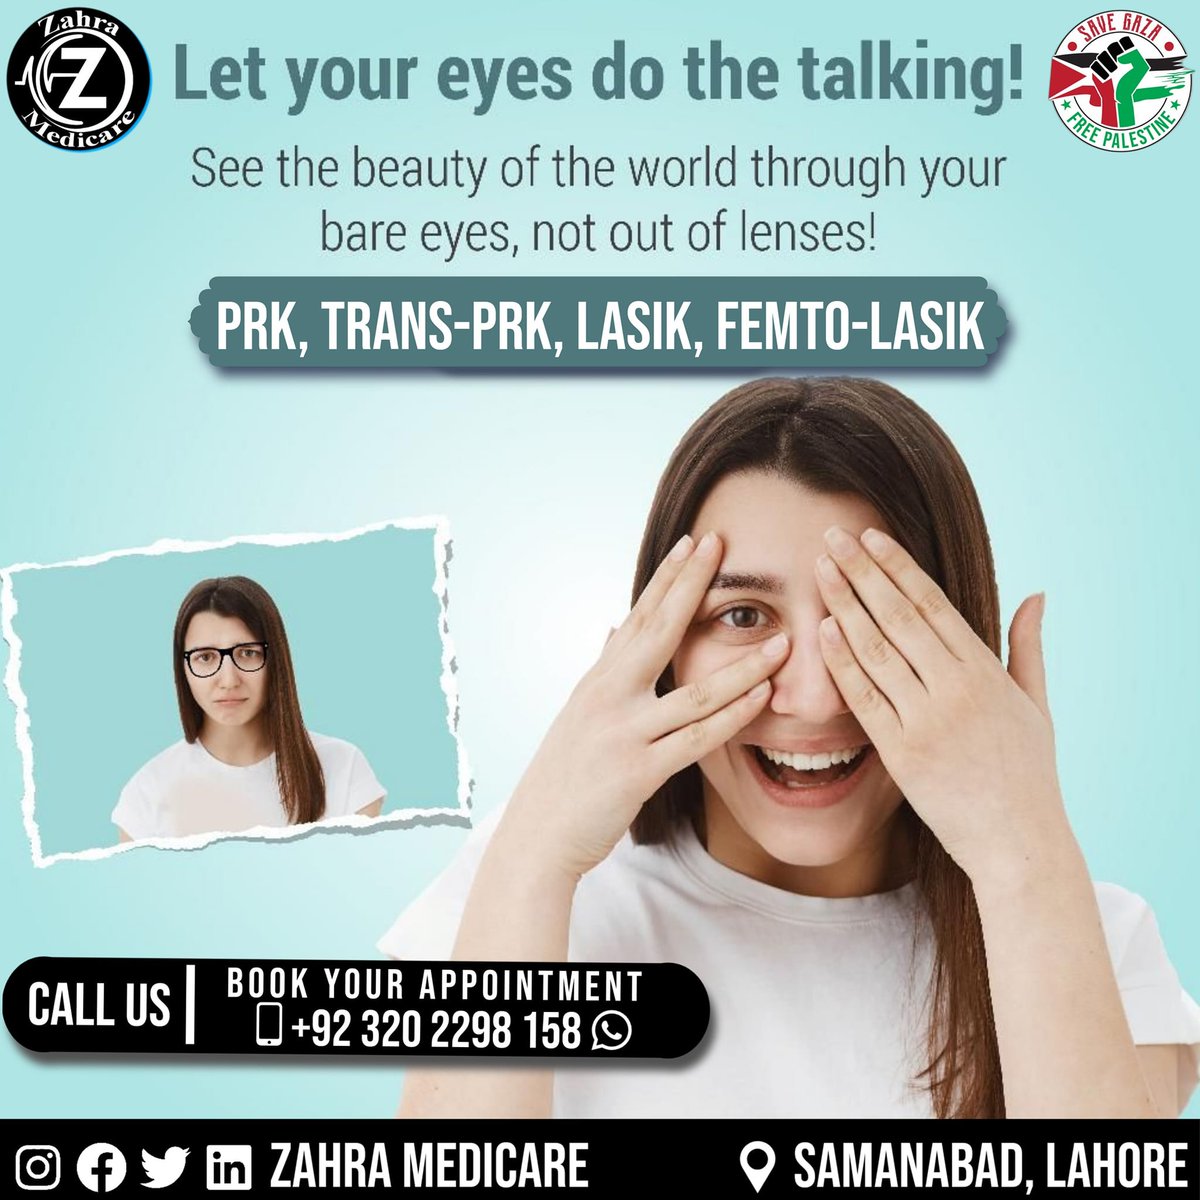 #ZahraMedicare #VisionCorrection #PRK #LASIK #FemtoLASIK #ContouraVision #ReLiXSmile #GlassesFree #BestEyeClinicInLahore #BestEyeSpecialist #BestEyeHospital #BestEyeDoctor #EyeHealth #LahoreEyeCare #VisionaryCare #HumanizeSEO #HealthyEyes #ClearVision 🌍👁️